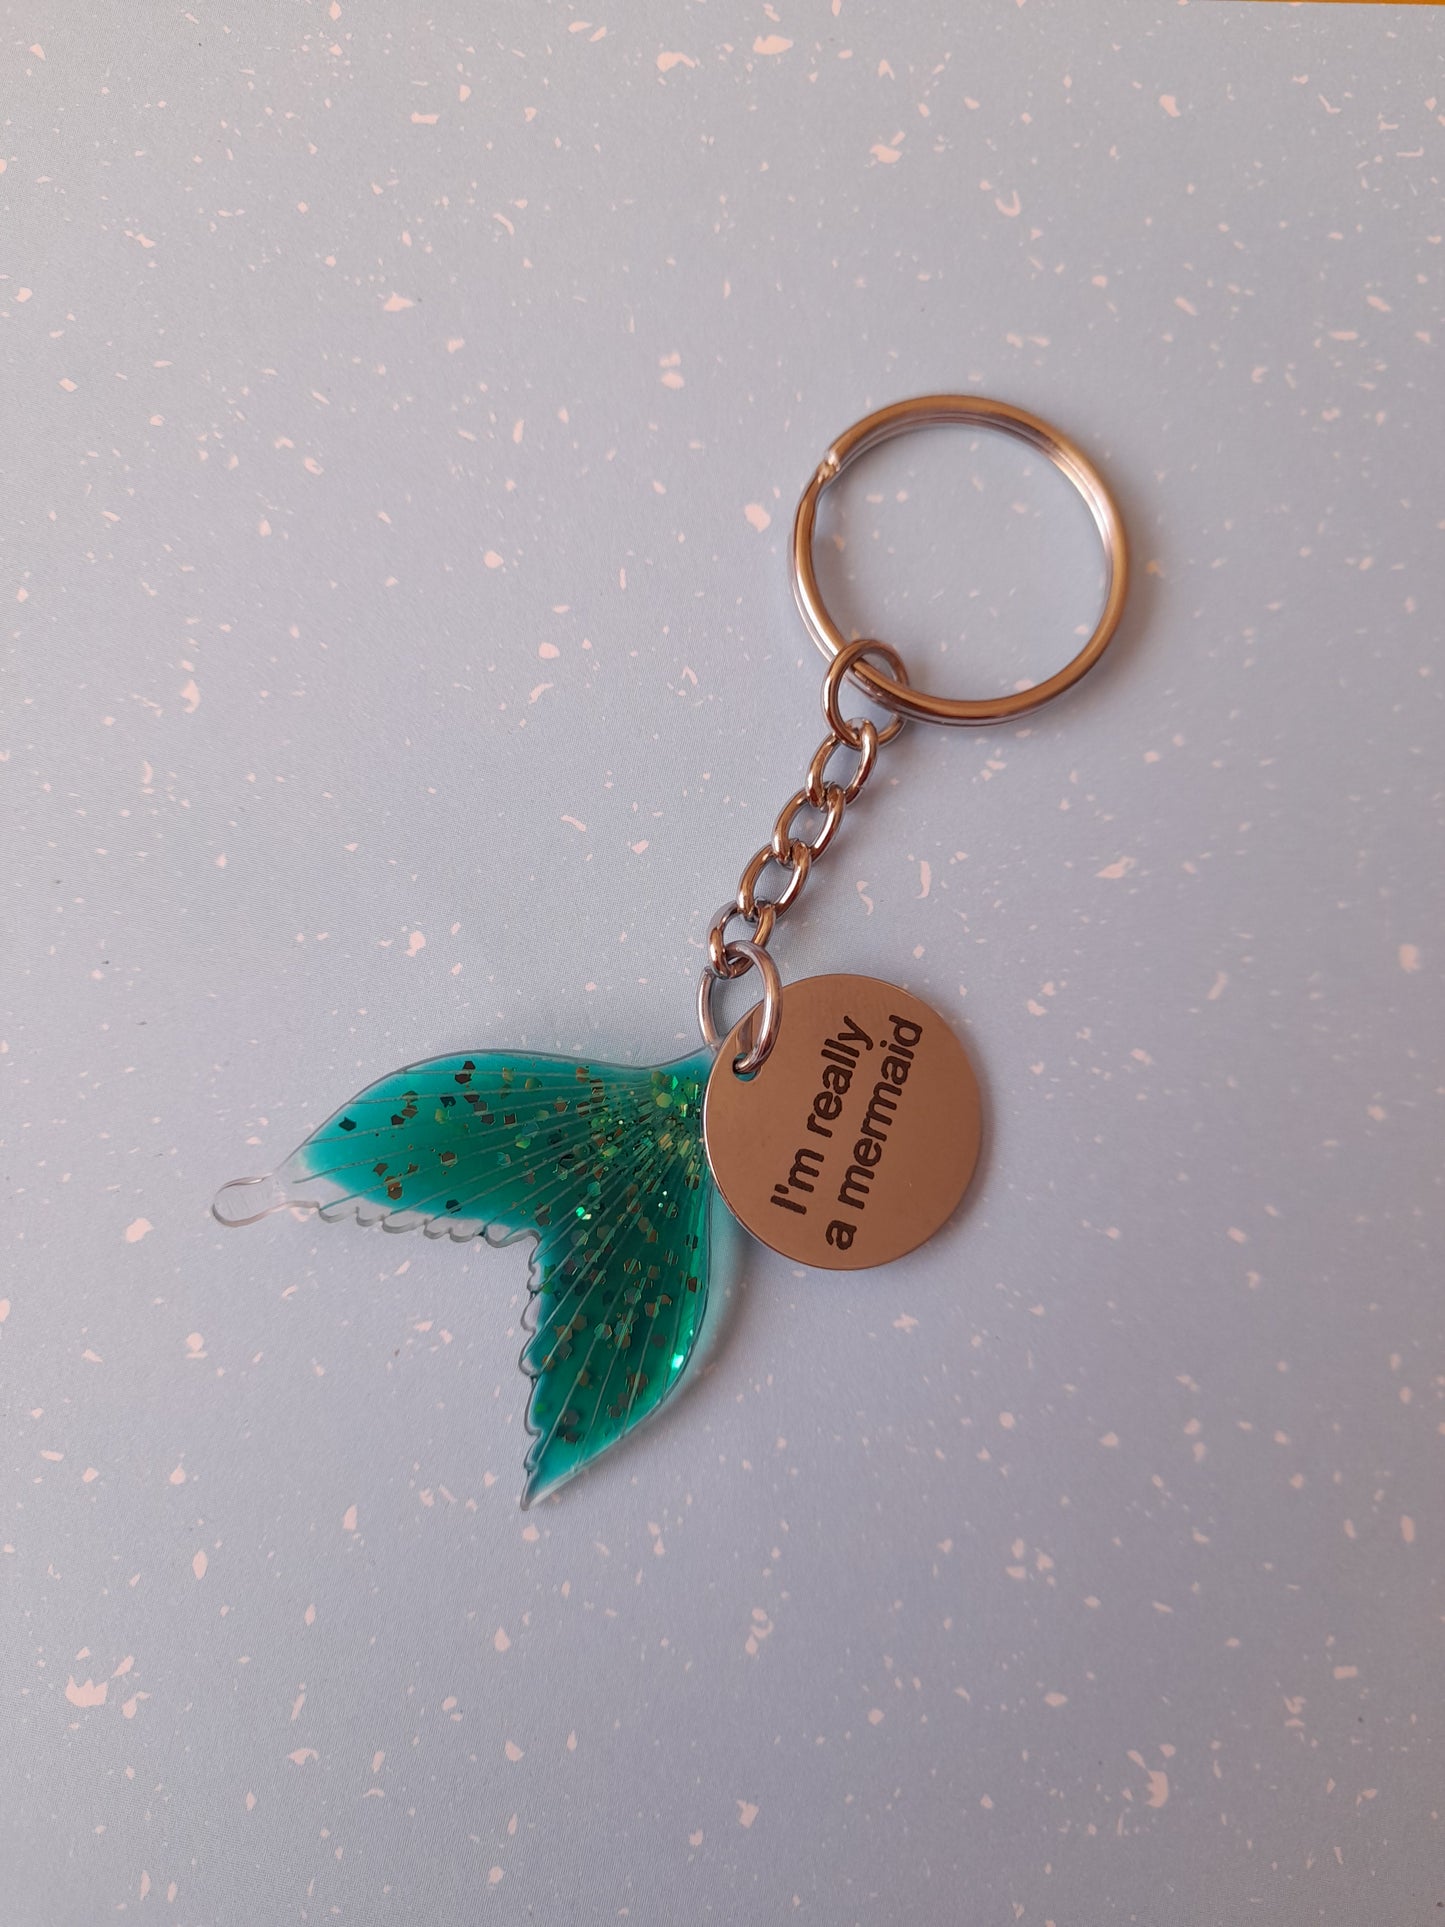 Mermaid key chain